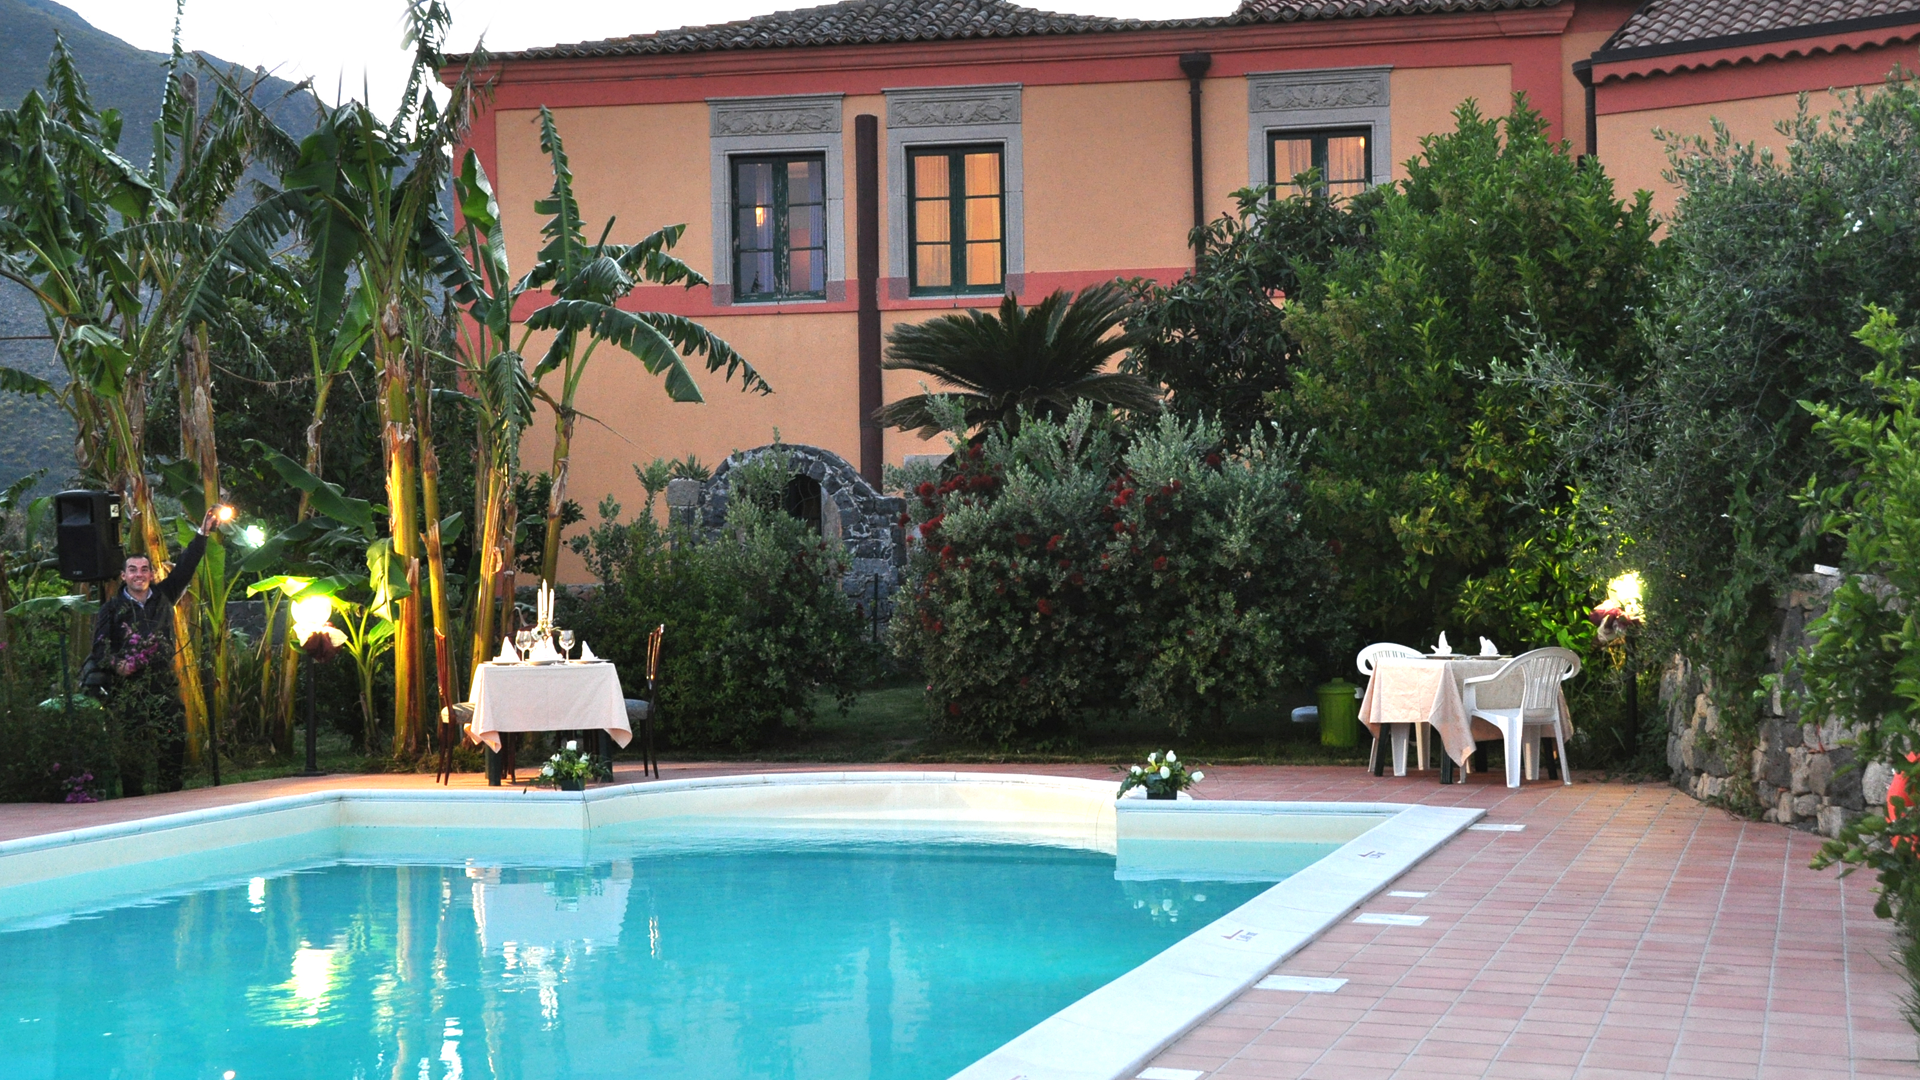 Swimmingpool på Hotel Casale Romano - Sicilien, Italien - Kulturrejser